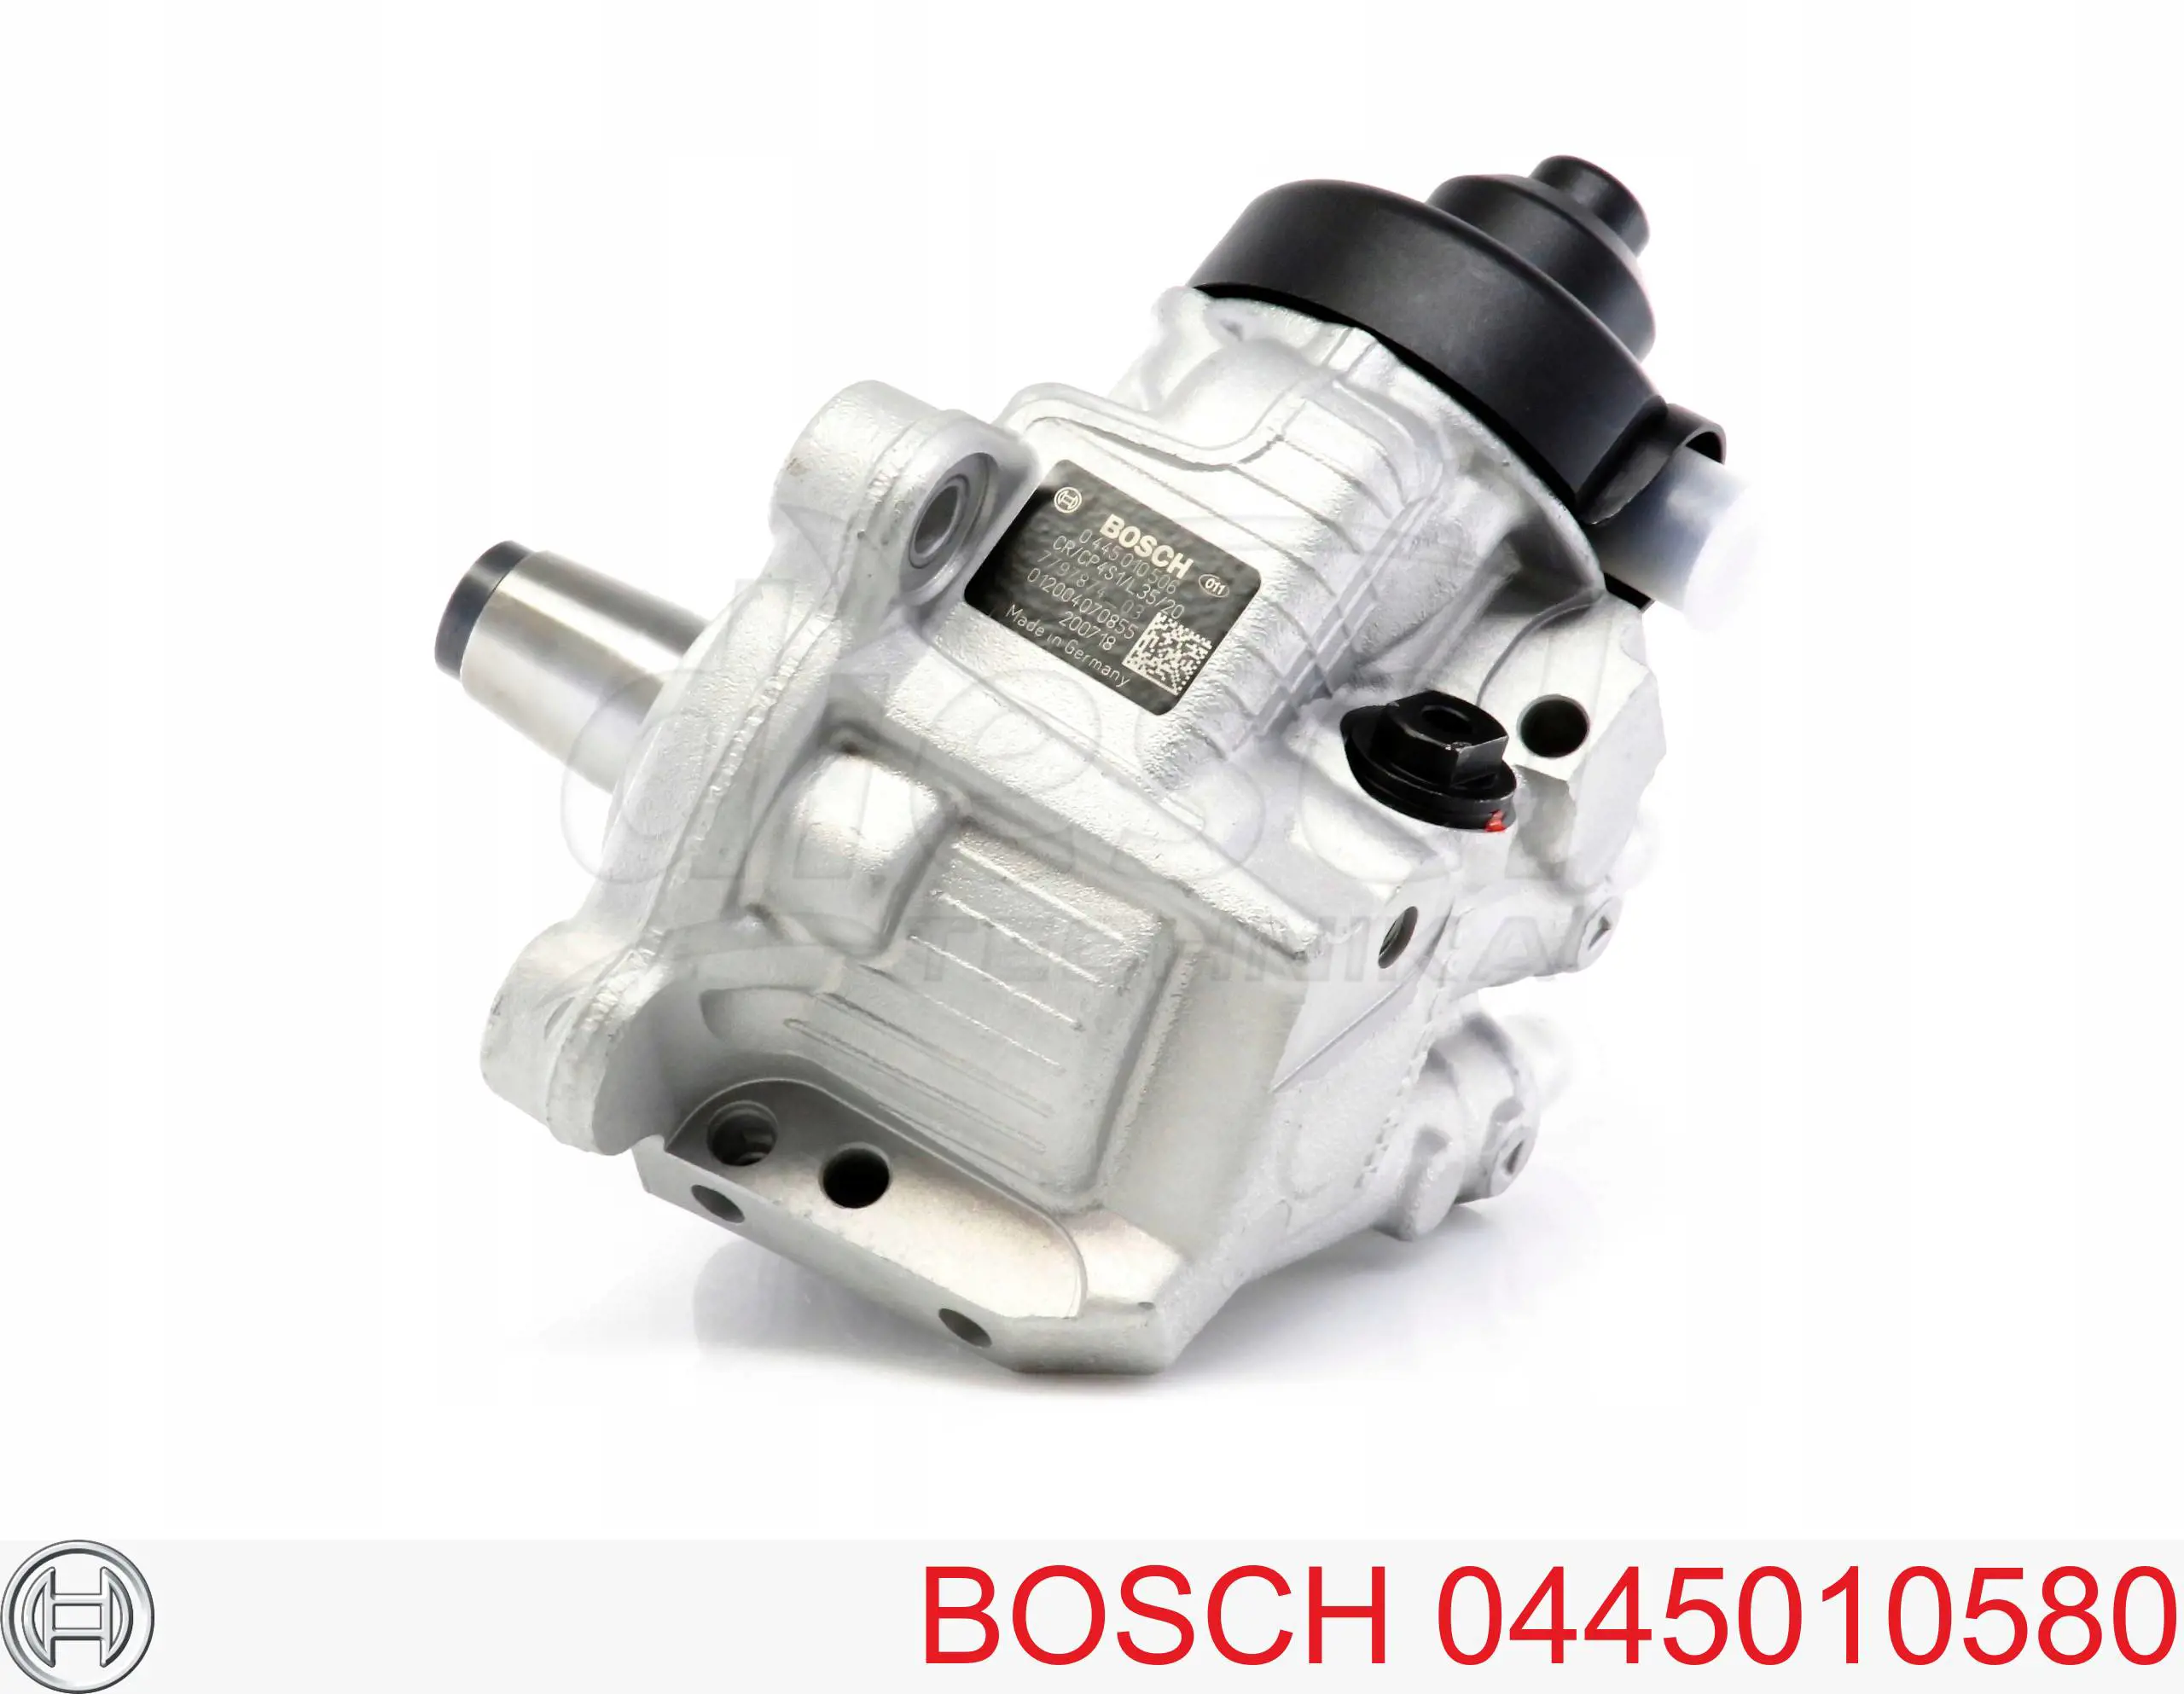 0445010580 Bosch bomba inyectora